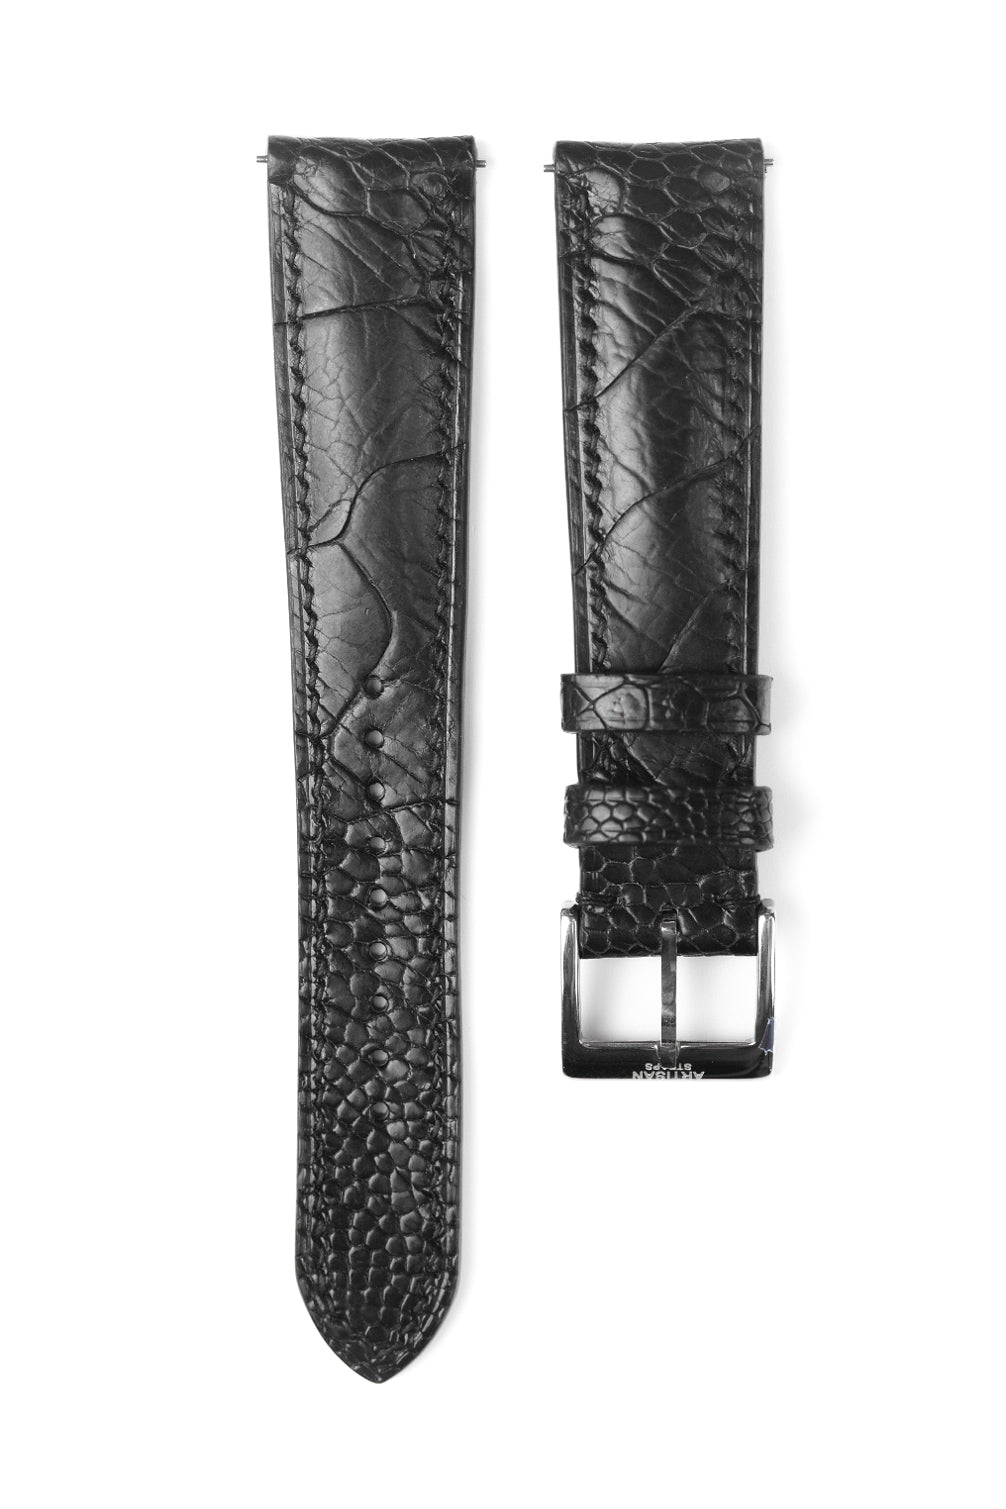 Black Glazed Ostrich Leg (Padded) Leather Strap - Artisan Straps